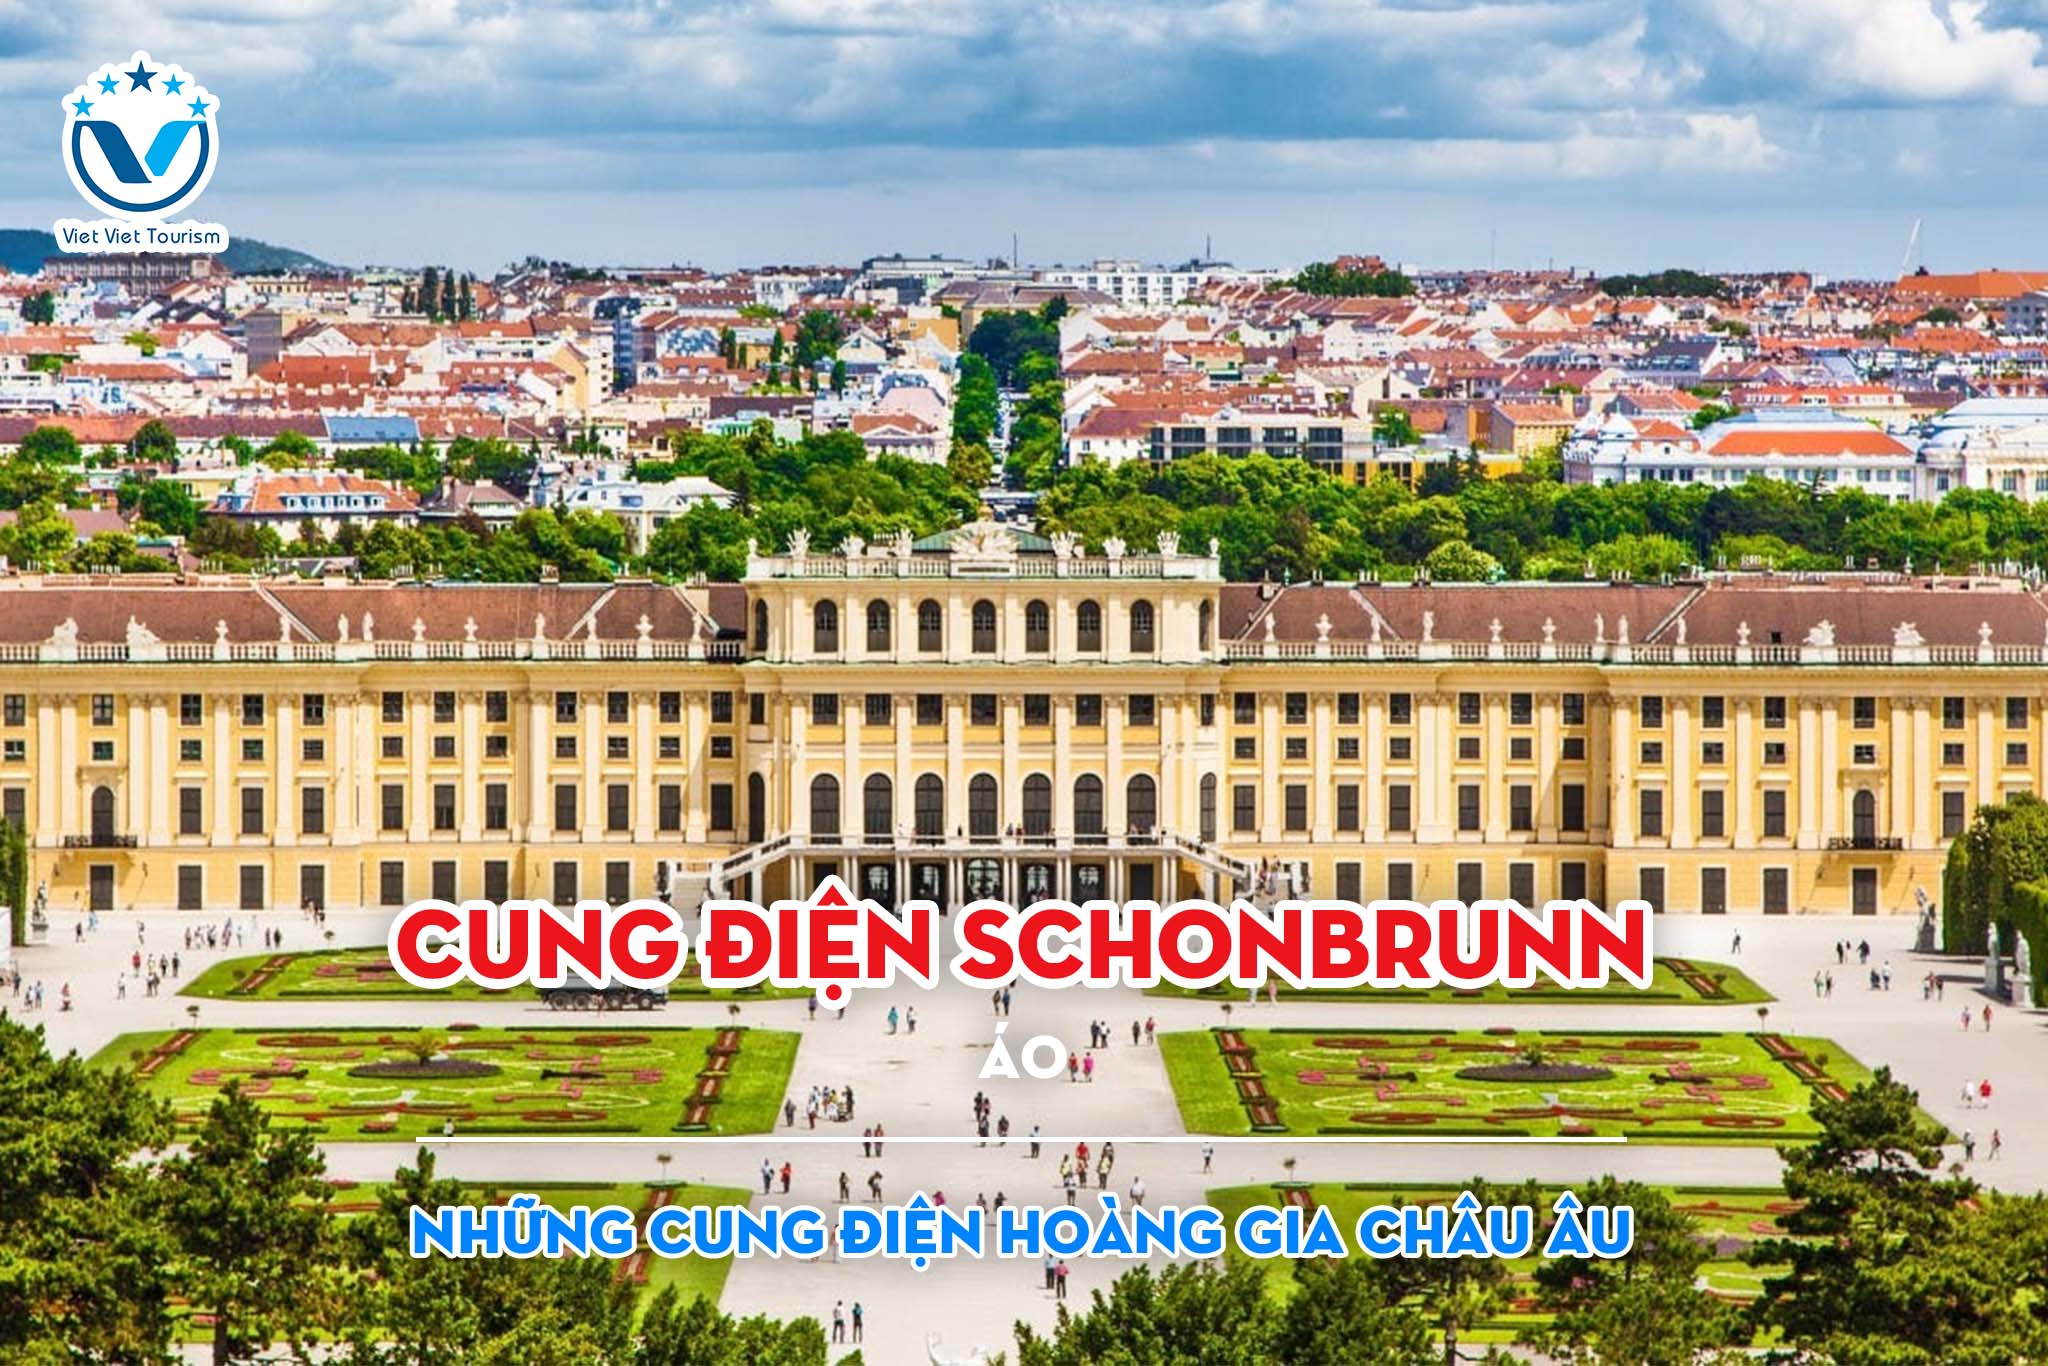 Royal Palace VVT 11. Cung điện Schönbrunn